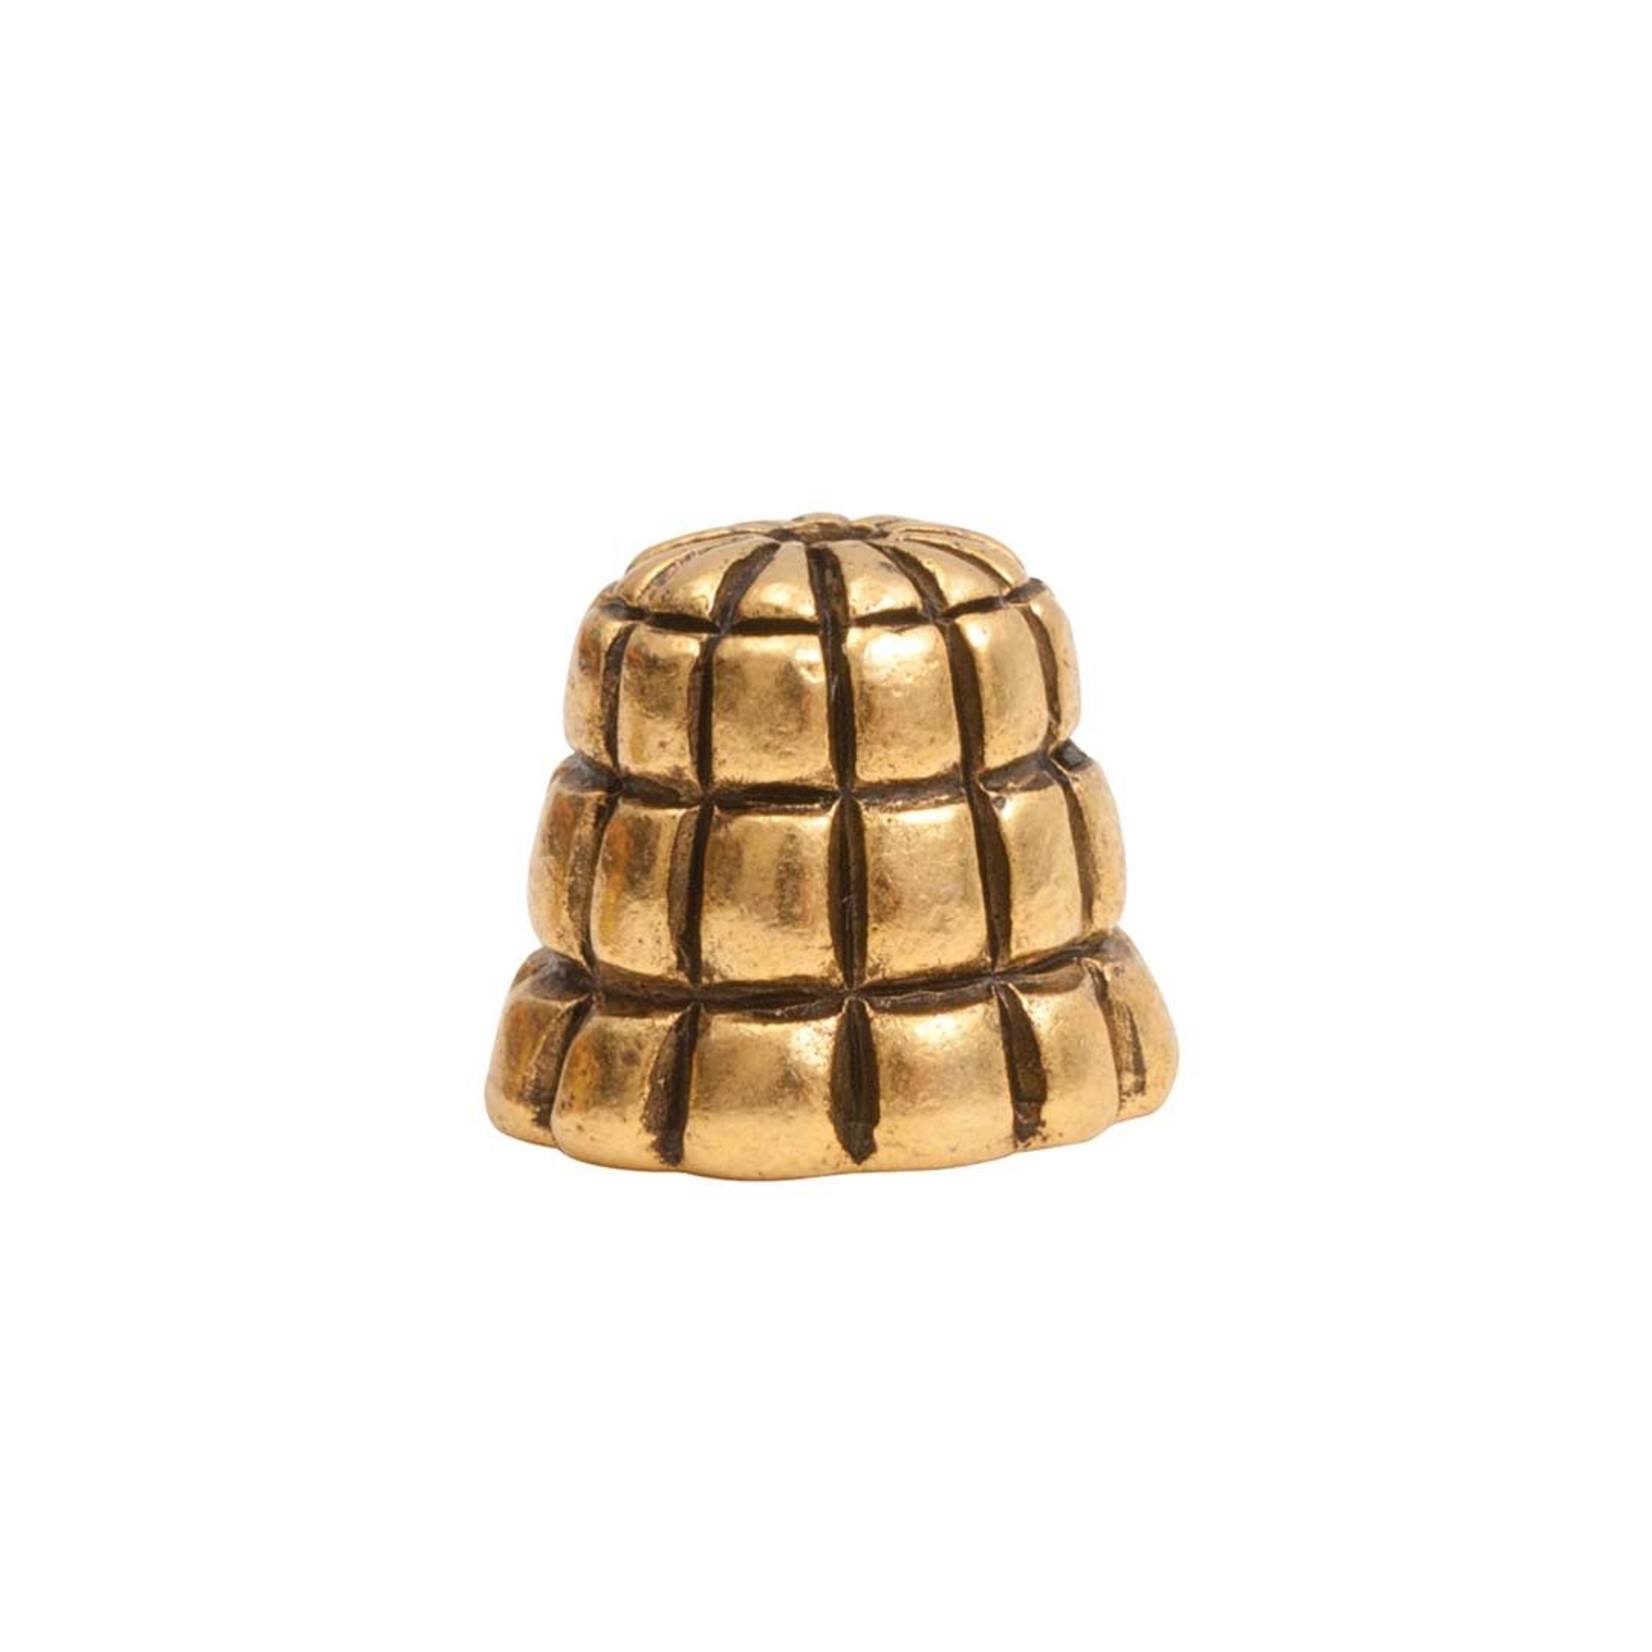 Nunn Design Sea Hive 9mm Bead Cap - Gold Plated